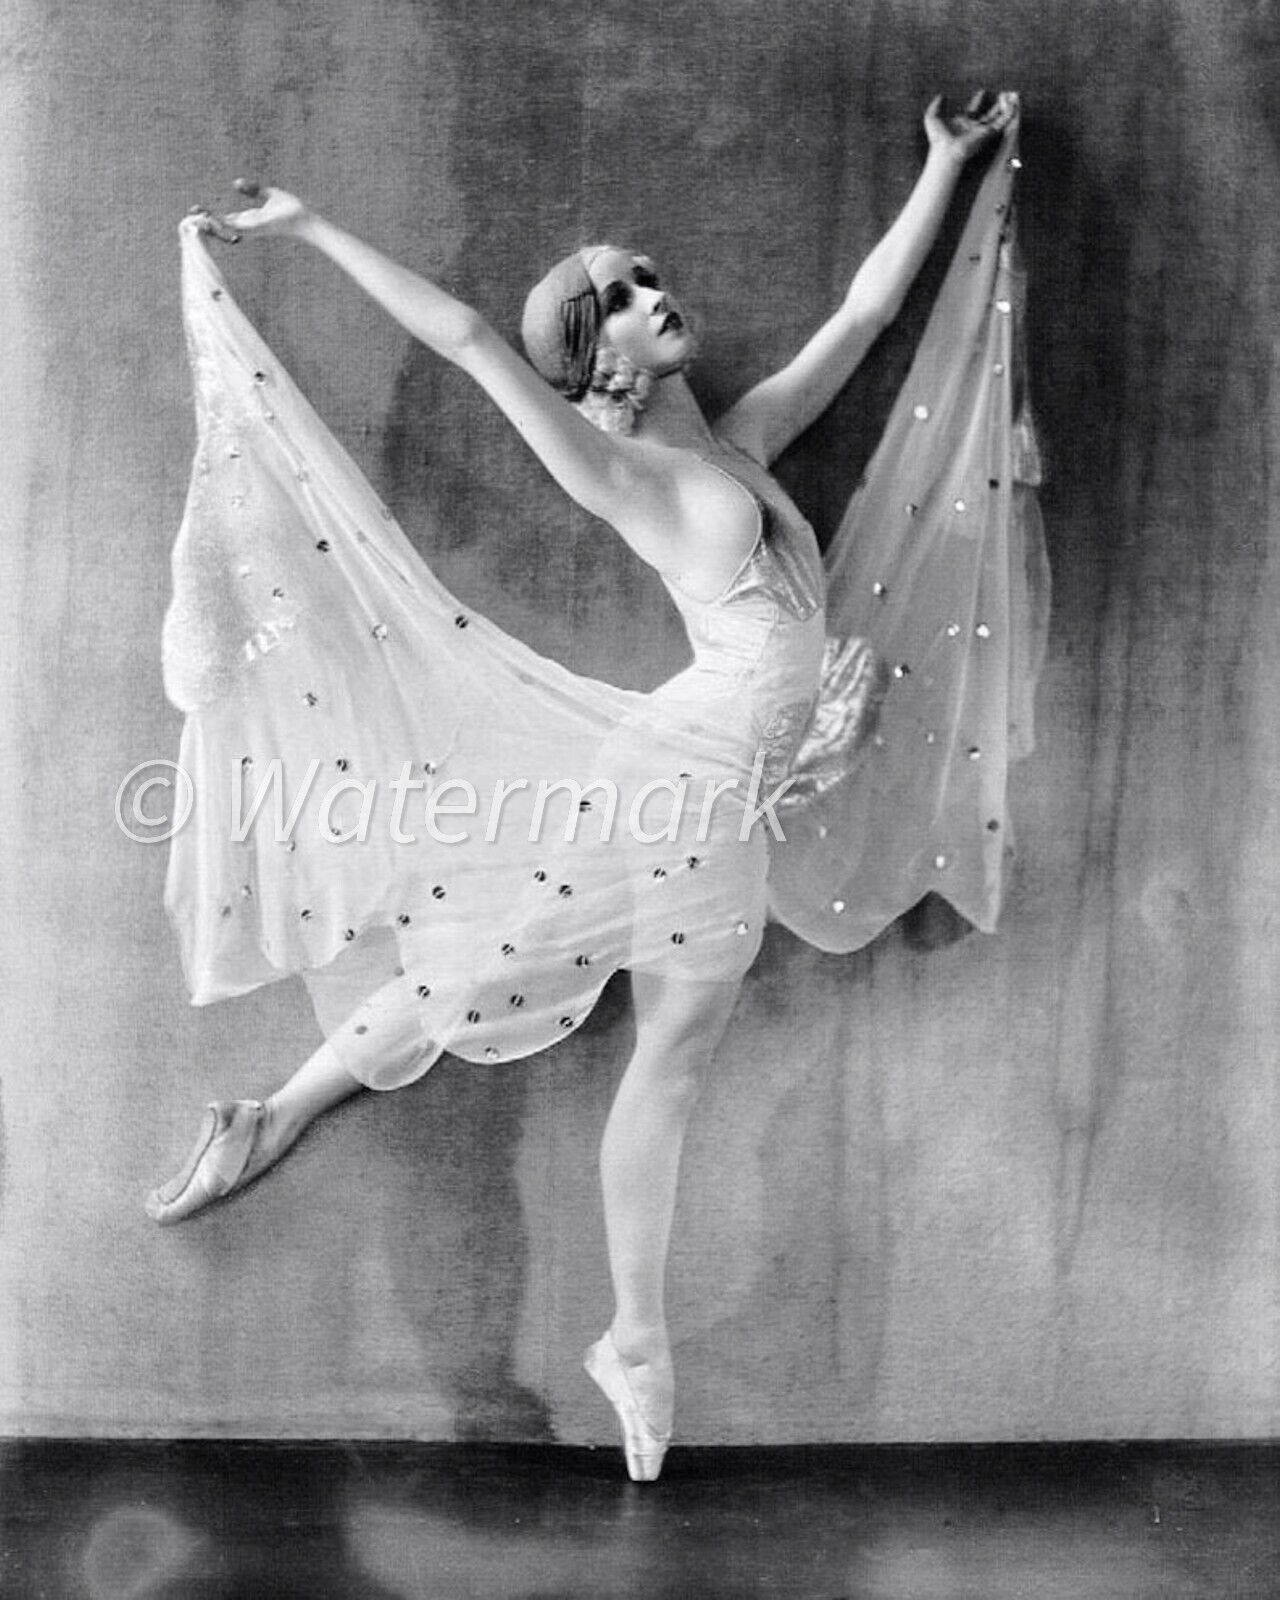 8X10 PUBLICITY PHOTO  Ziegfeld Follies -  Vintage 1920s glamour- Flapper Girl